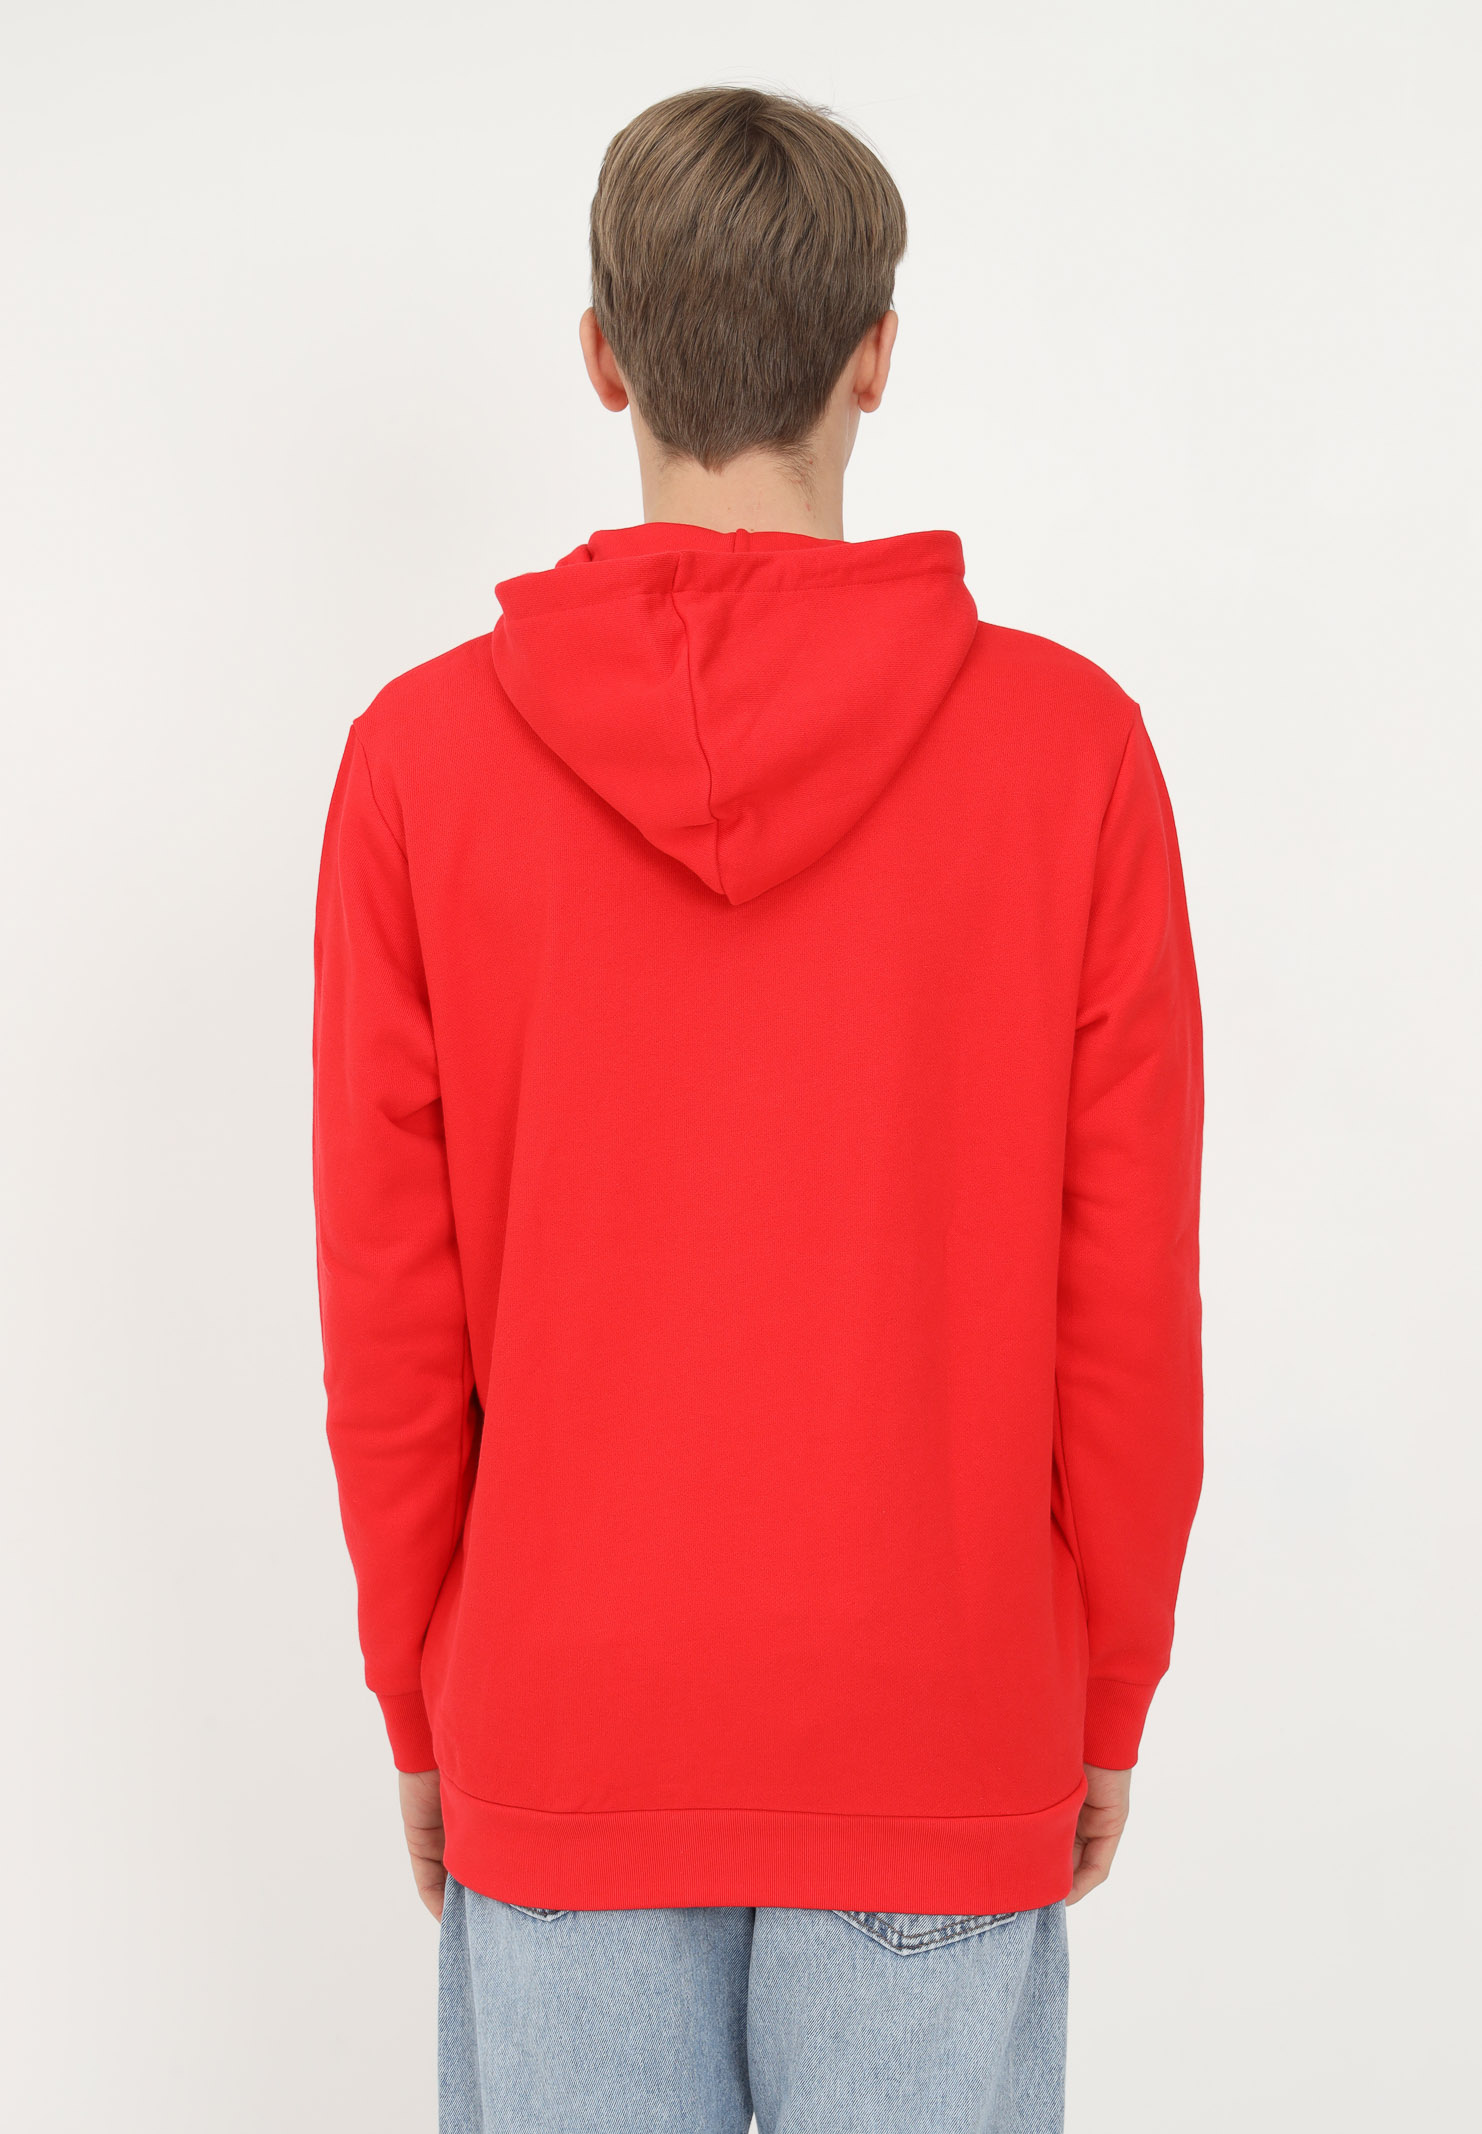 Unisex red adicolor classics trefoil hoodie ADIDAS | HE9500.